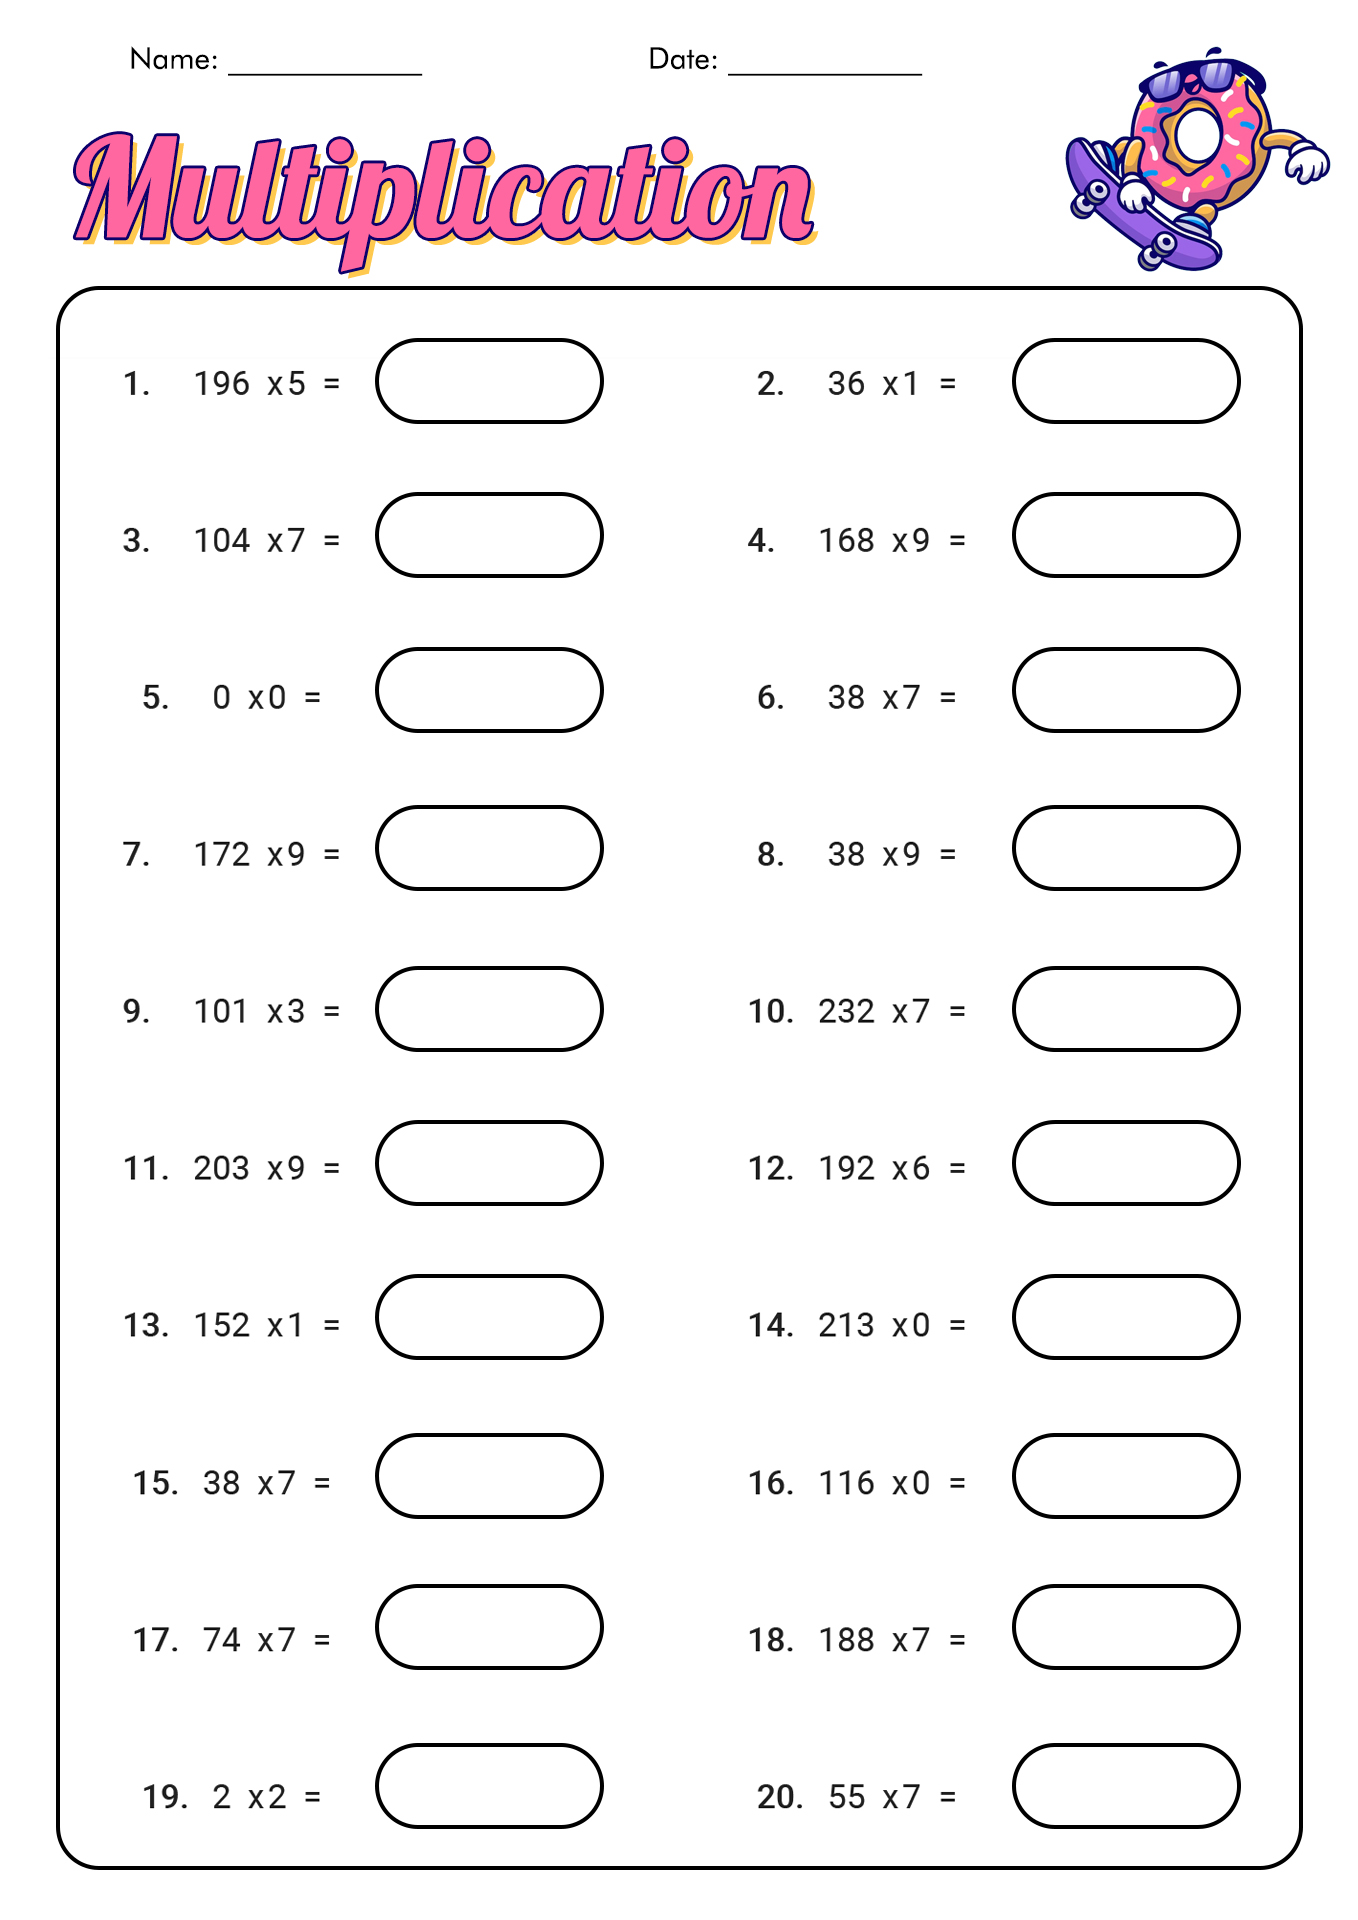 Free 3rd Grade Math Worksheets